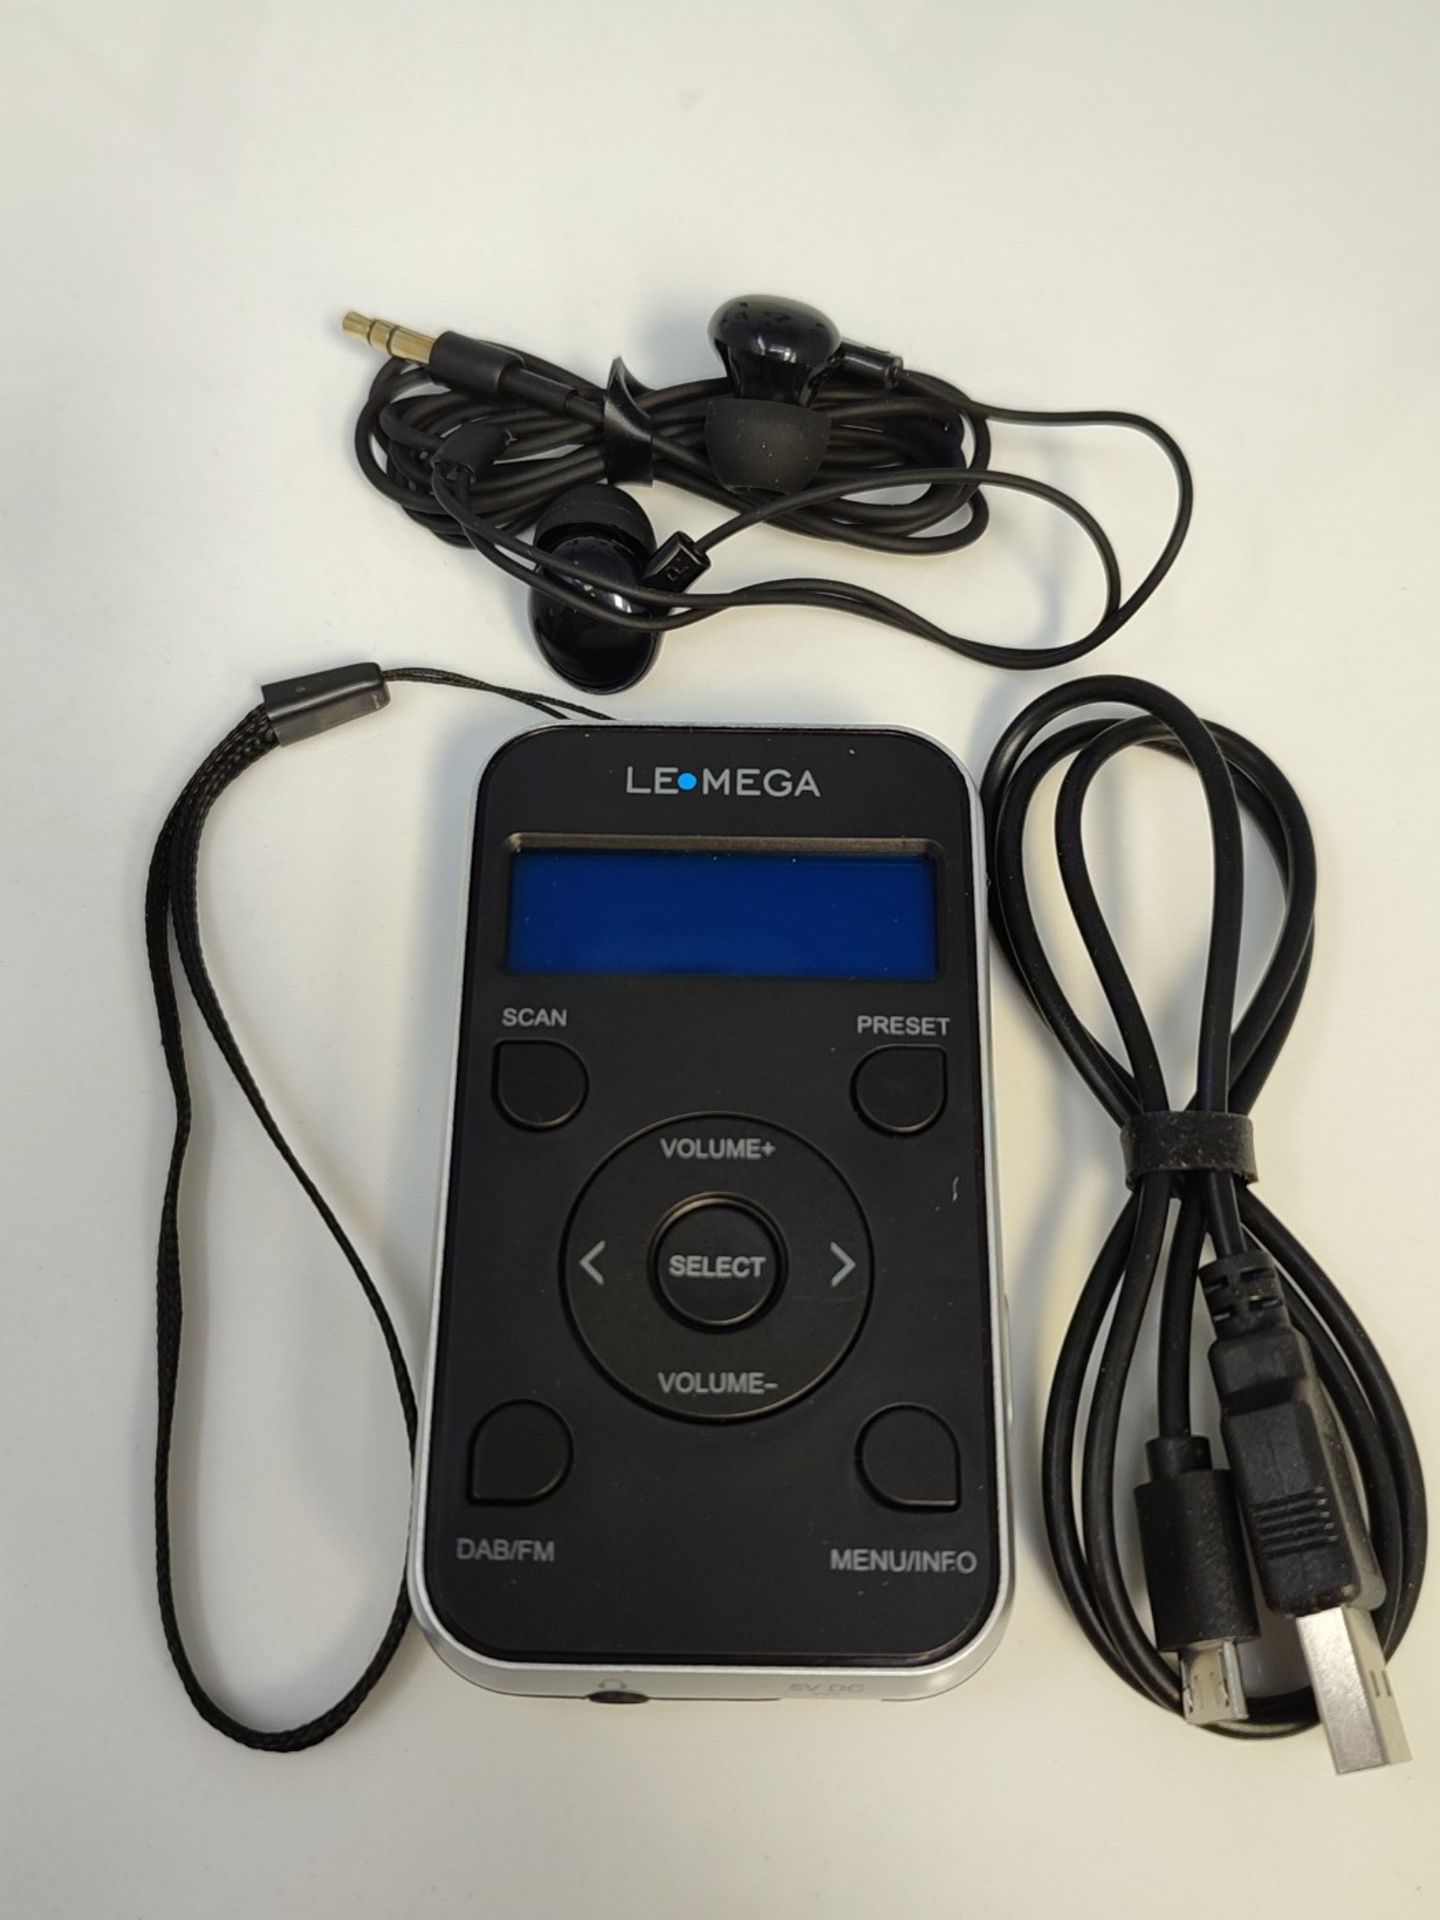 LEMEGA PR1 Pocket Dab/Dab+/FM Radio, Portable Radio with Sporty Design, Includes Earph - Image 2 of 4